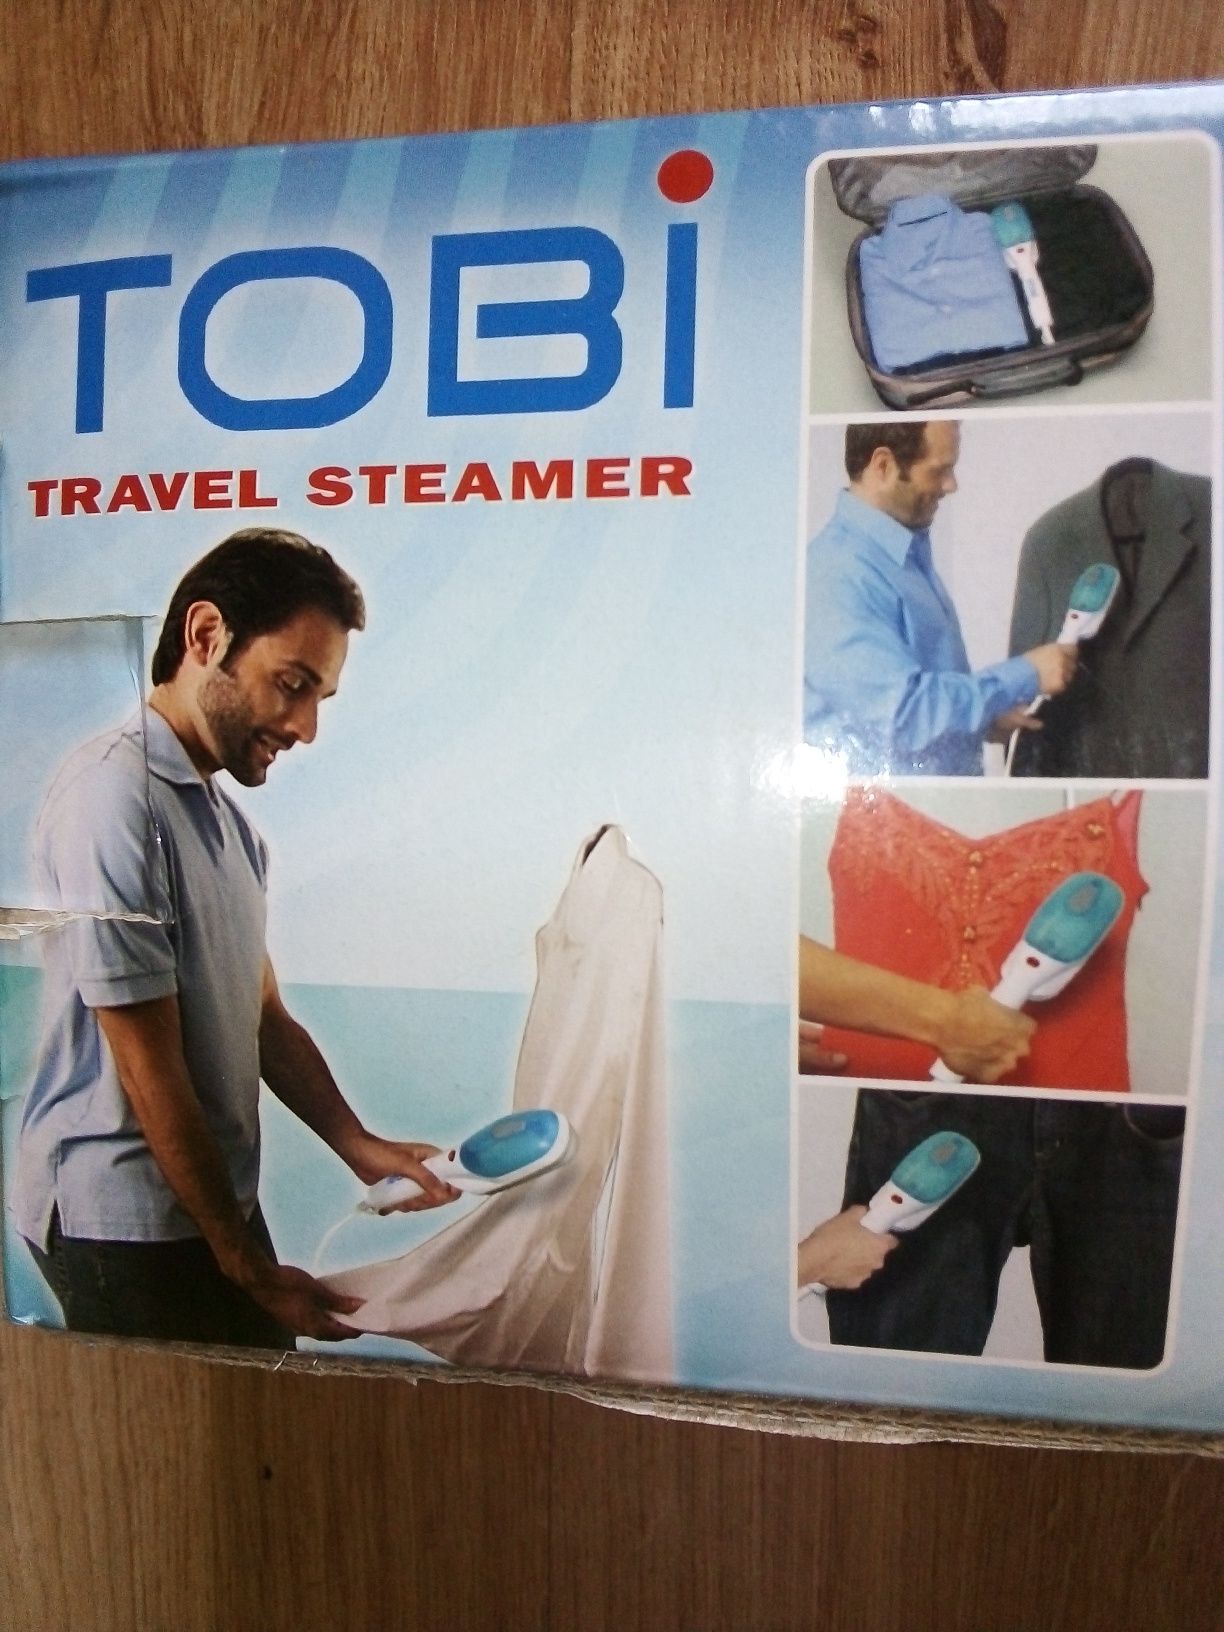 Nowe żelazko parowe Steamer TOBI.